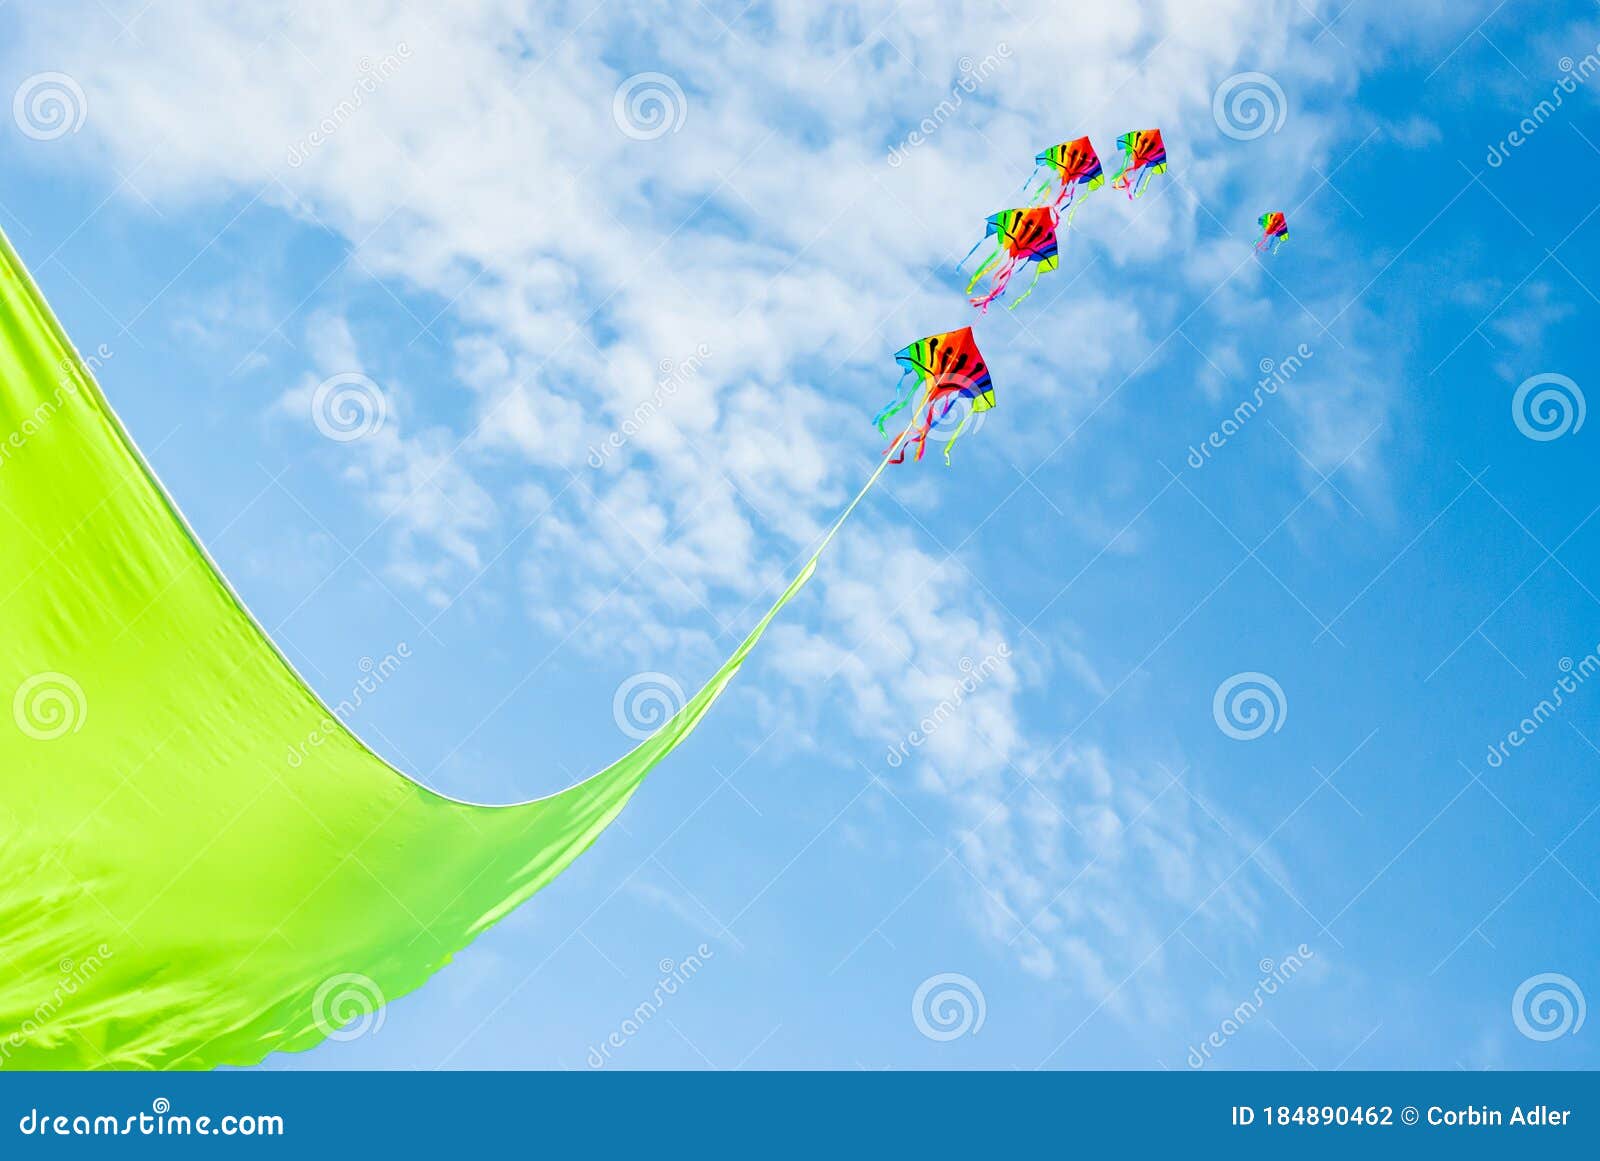 Amazon.com: In the Breeze Rainbow 27 Inch Diamond Kite - Single Line ...